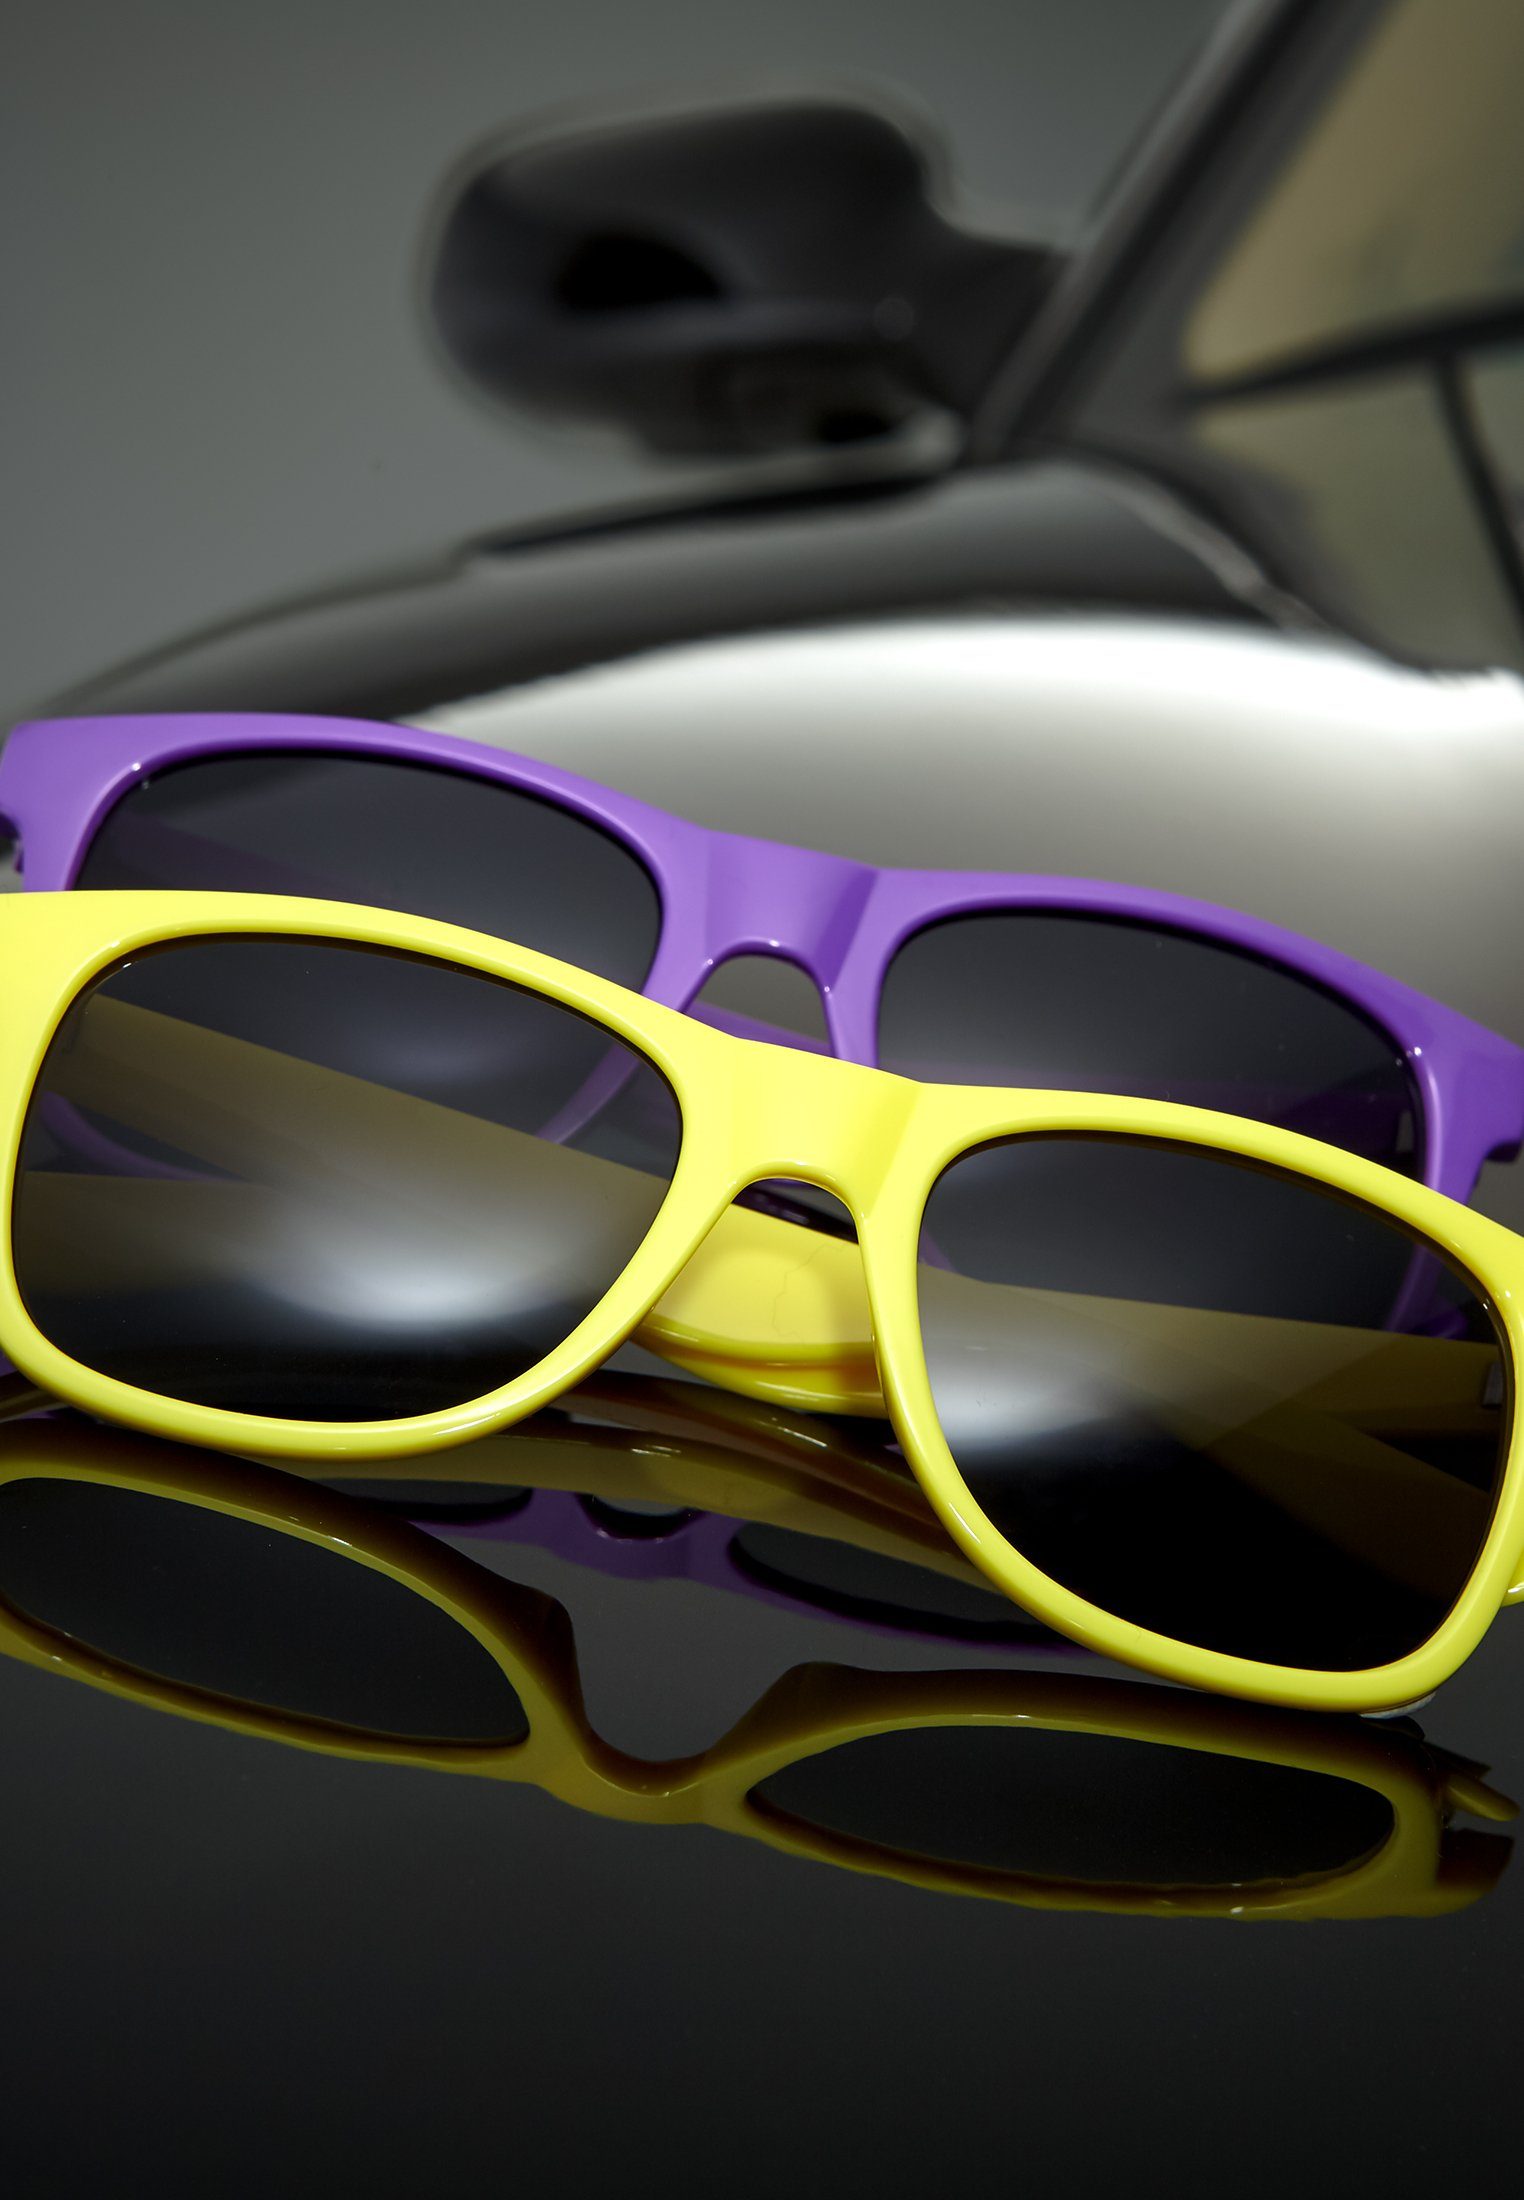 MSTRDS Sonnenbrille Accessoires Groove purple Shades GStwo